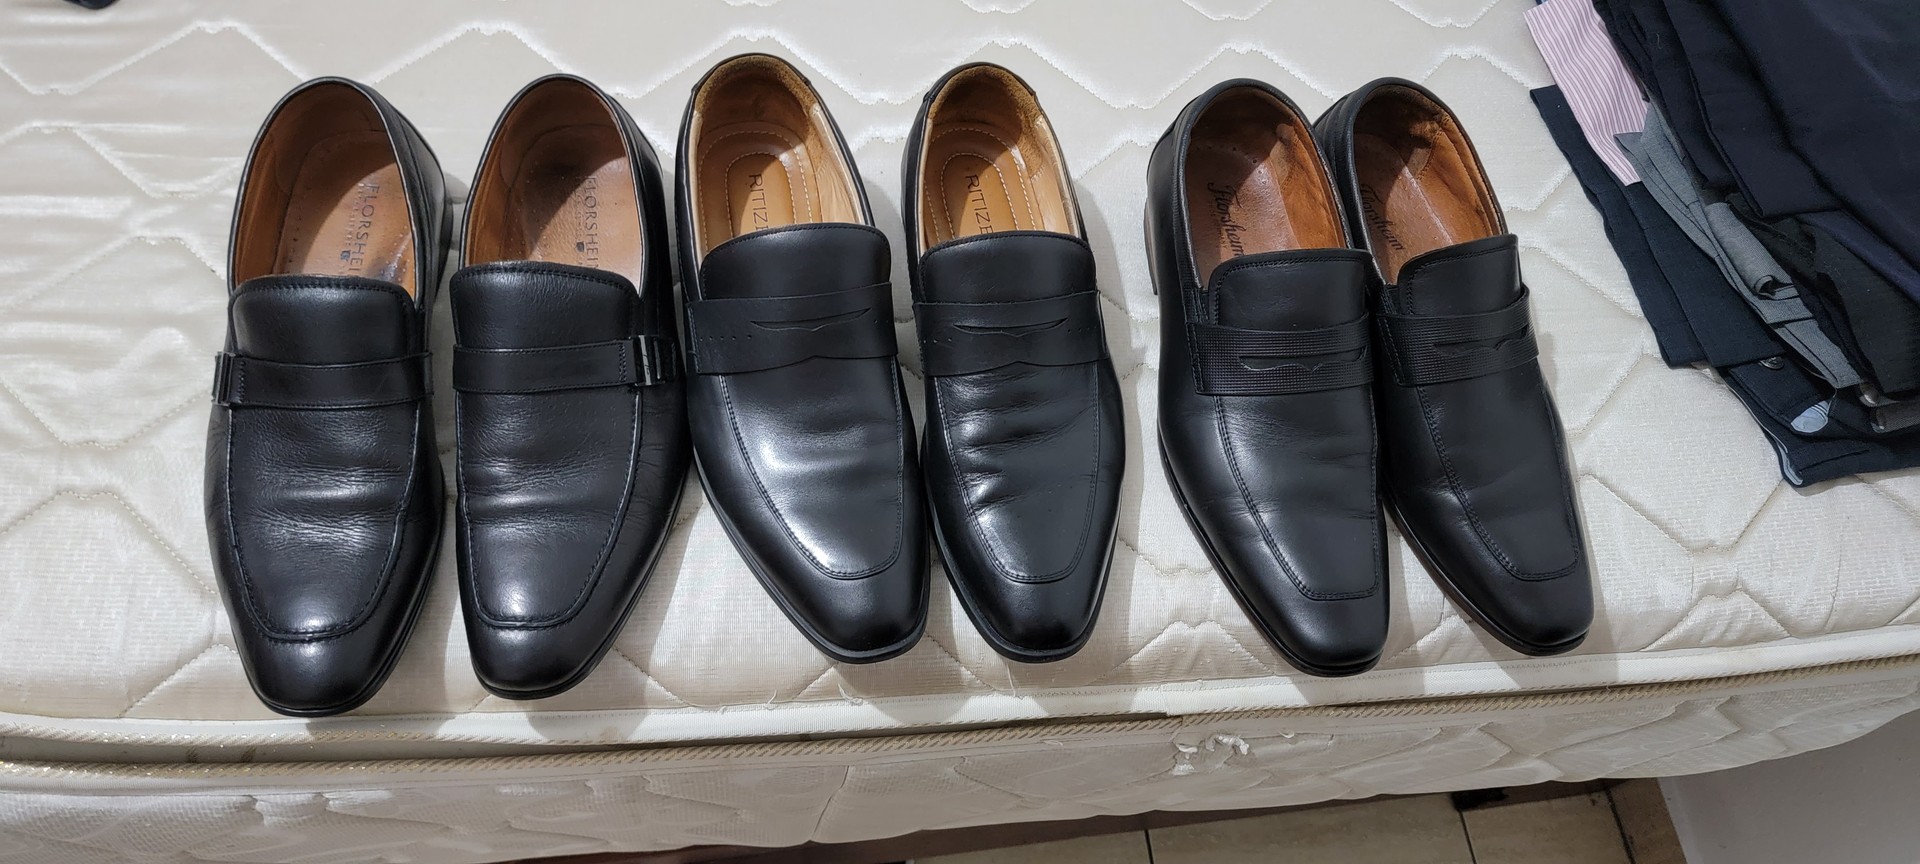 zapatos para hombre - **Vendo zapatos formales Florsheim size 11.5, 11 como nuevos, tenis de baskeball 3